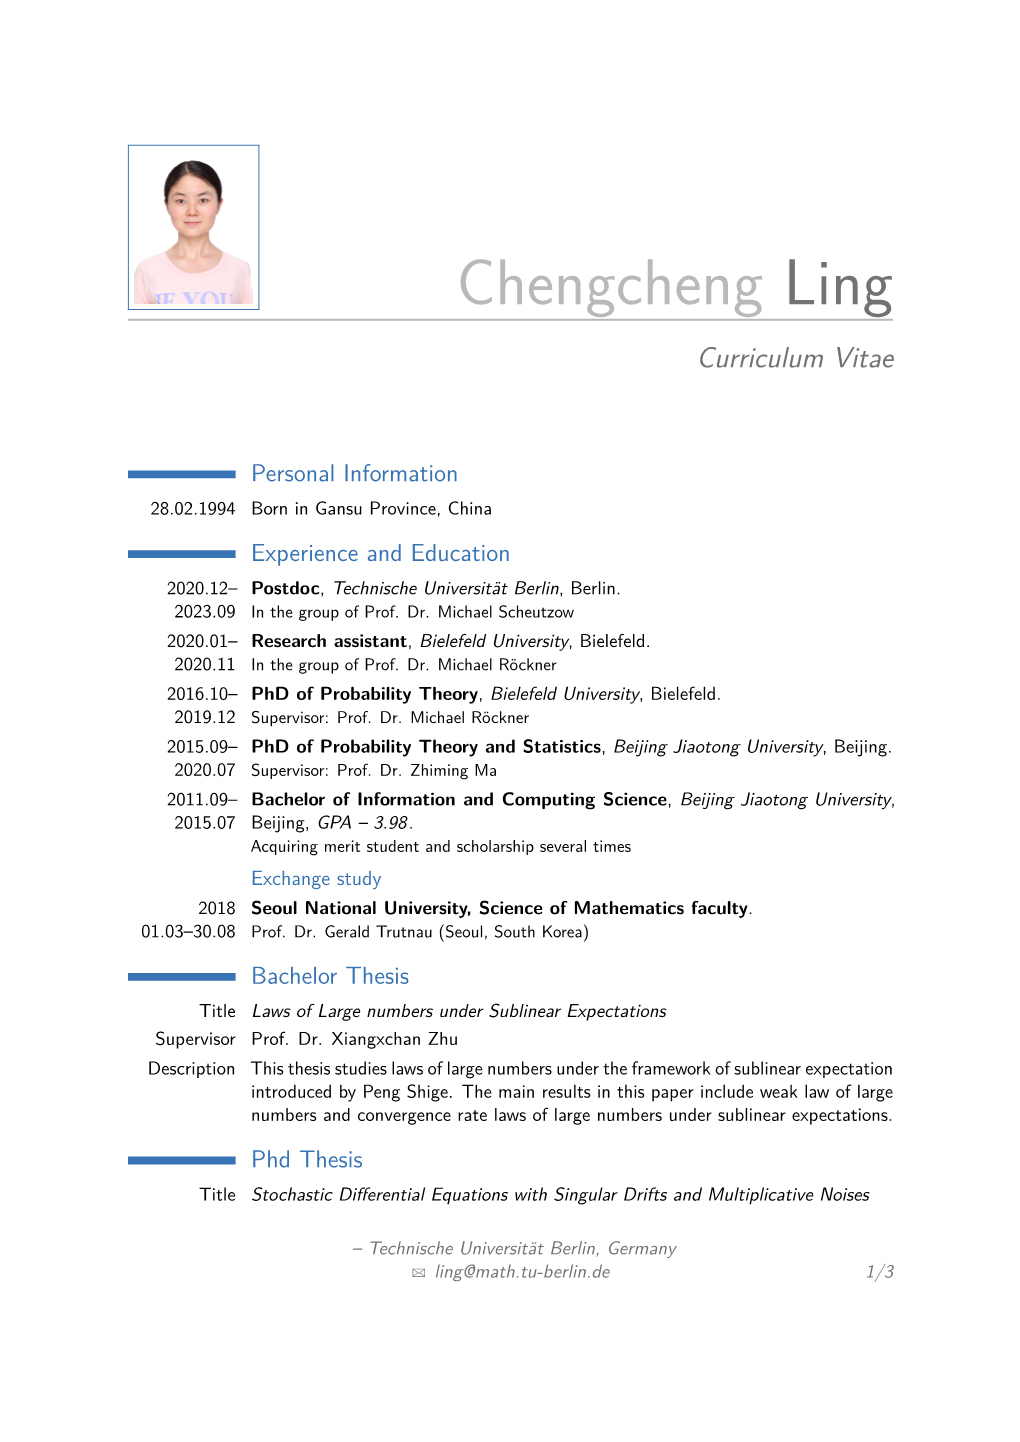 Chengcheng Ling – Curriculum Vitae